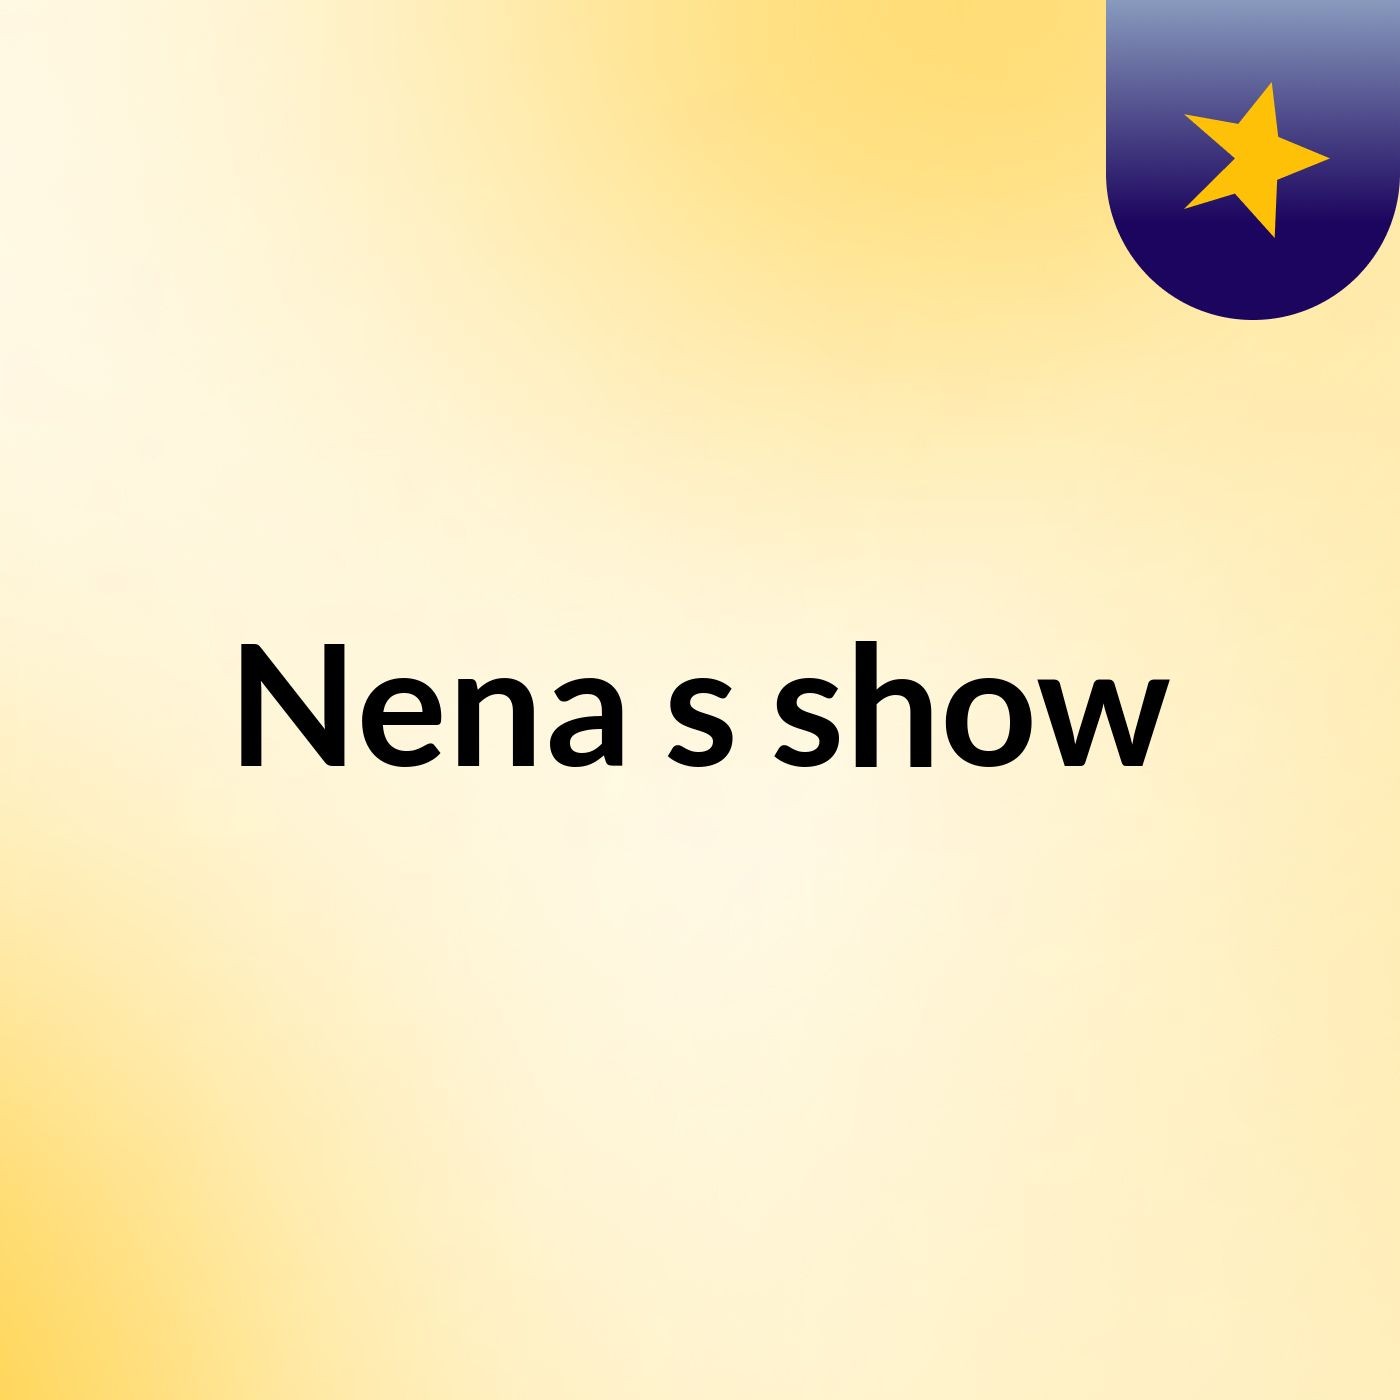 Nena's show